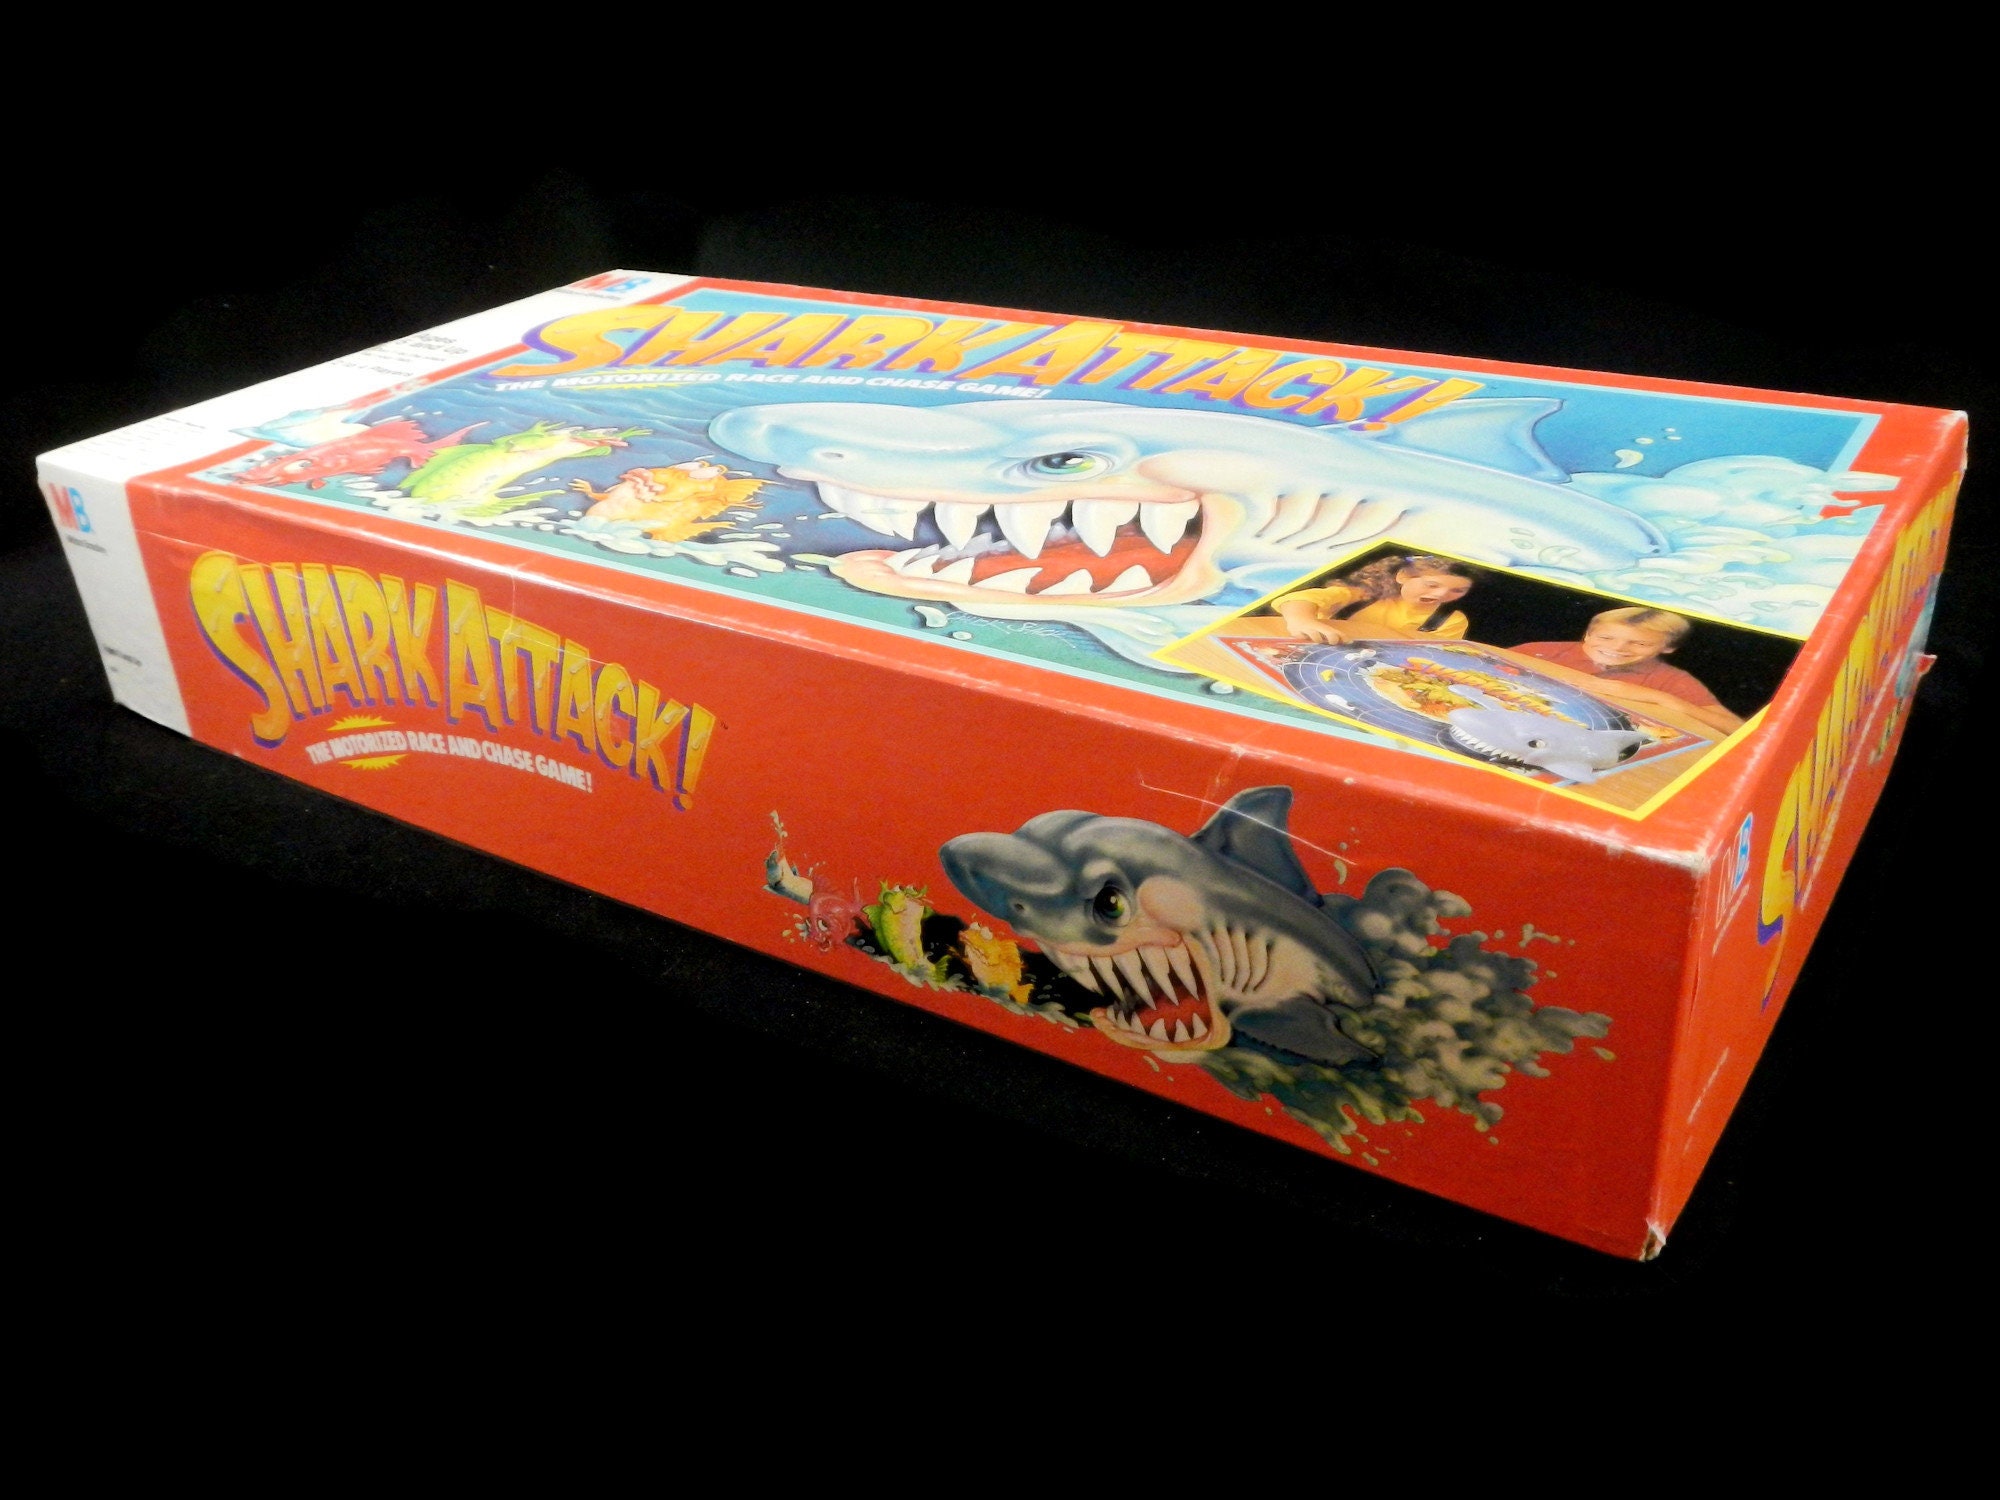 Finny the Shark Jumbilee Stories Game - Paper House